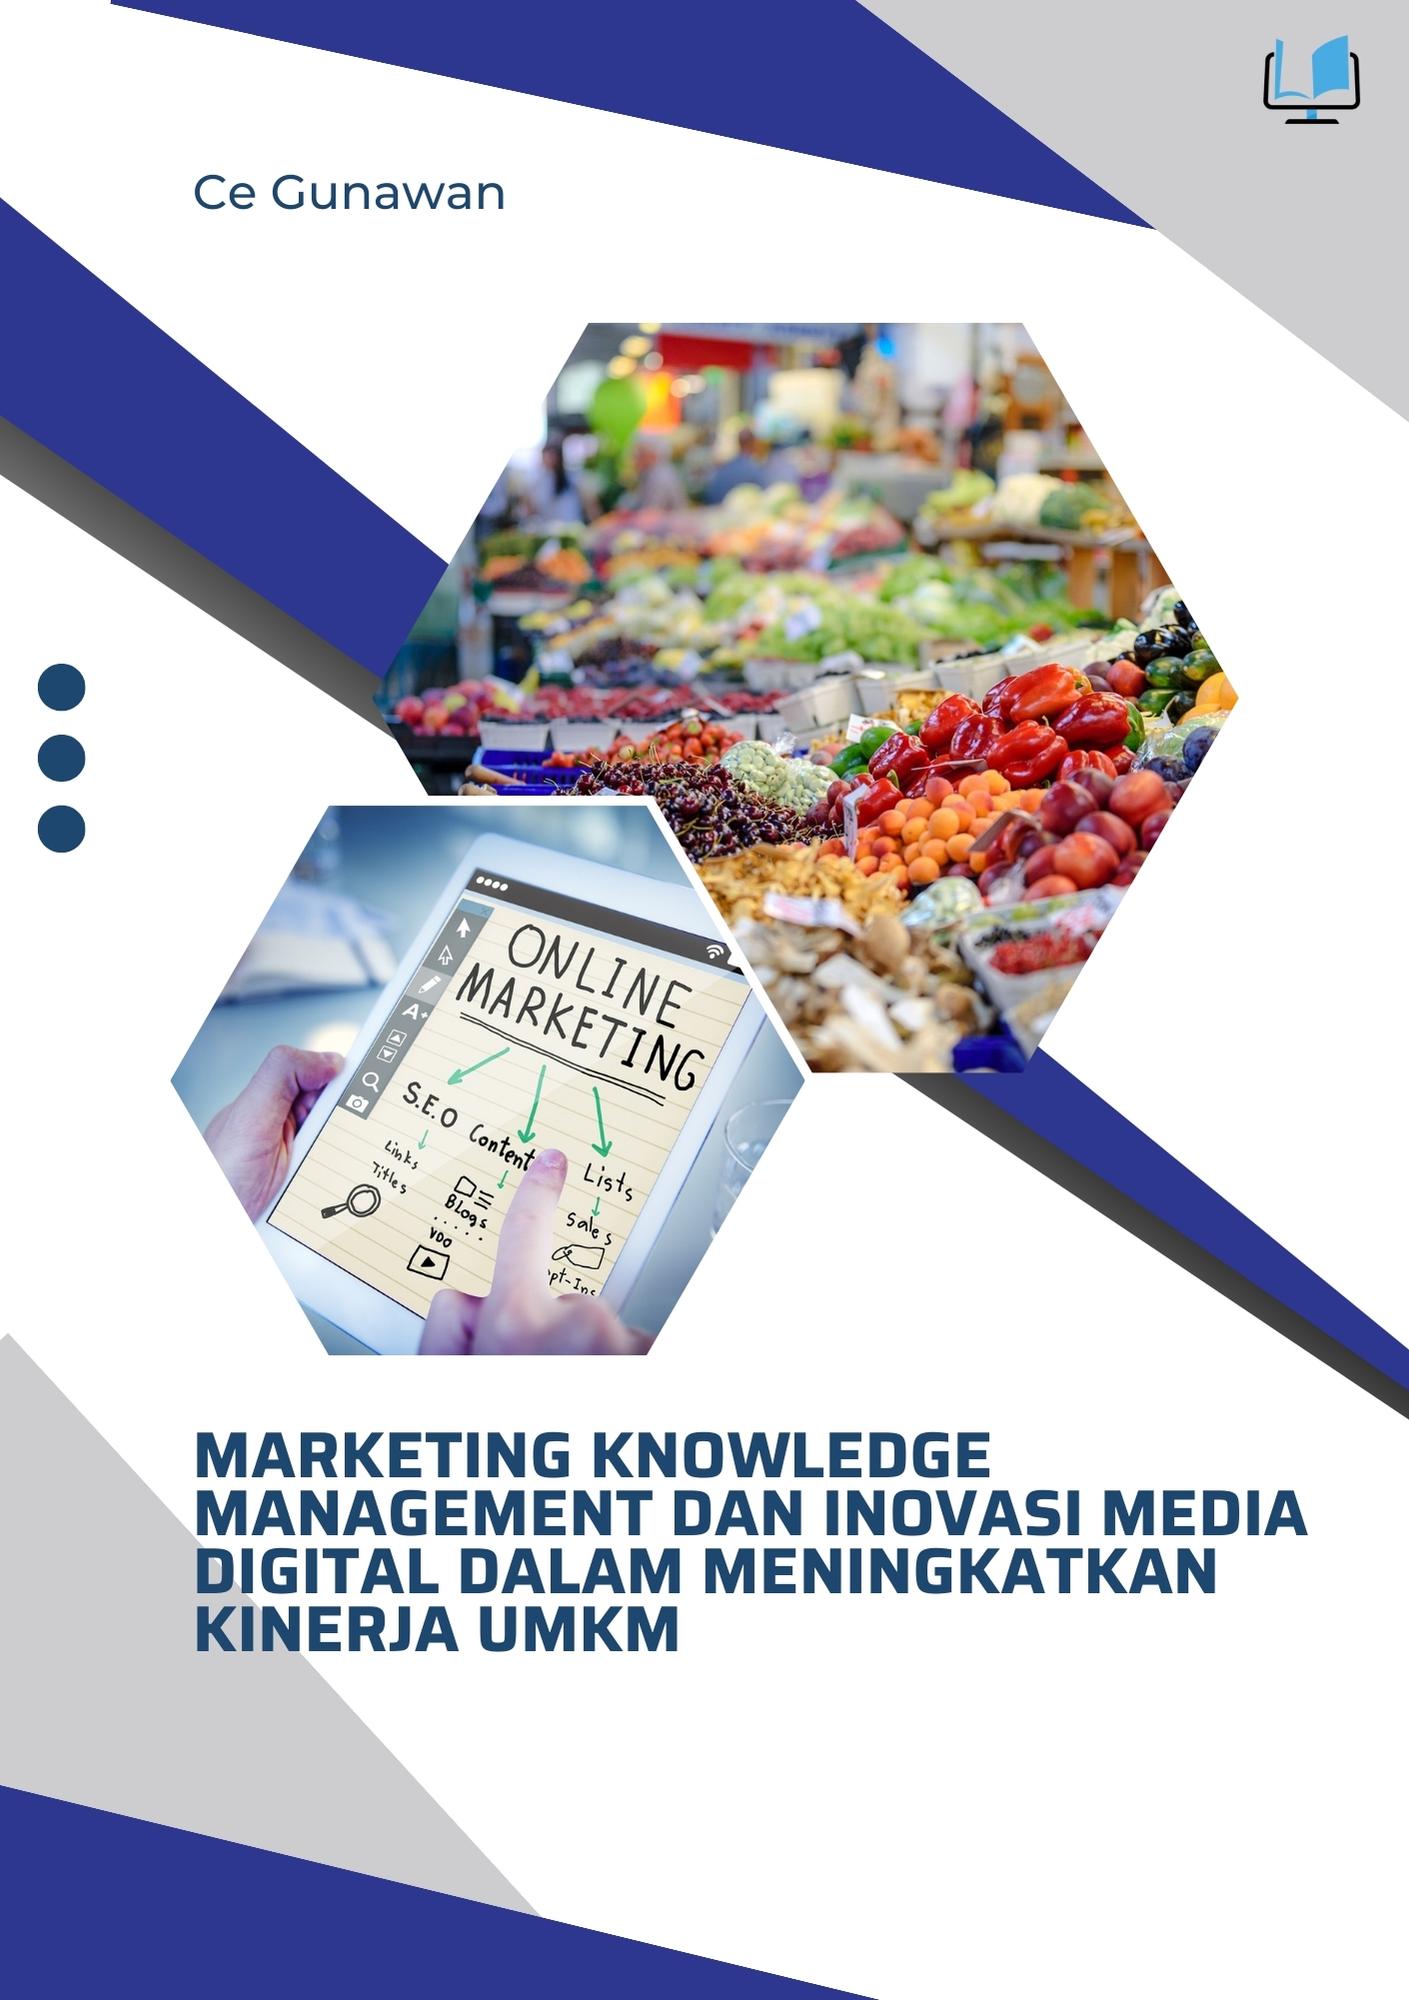 Naureen Publisher - Marketing Knowledge Management dan Inovasi Media Digital Dalam Meningkatkan Kinerja UMKM